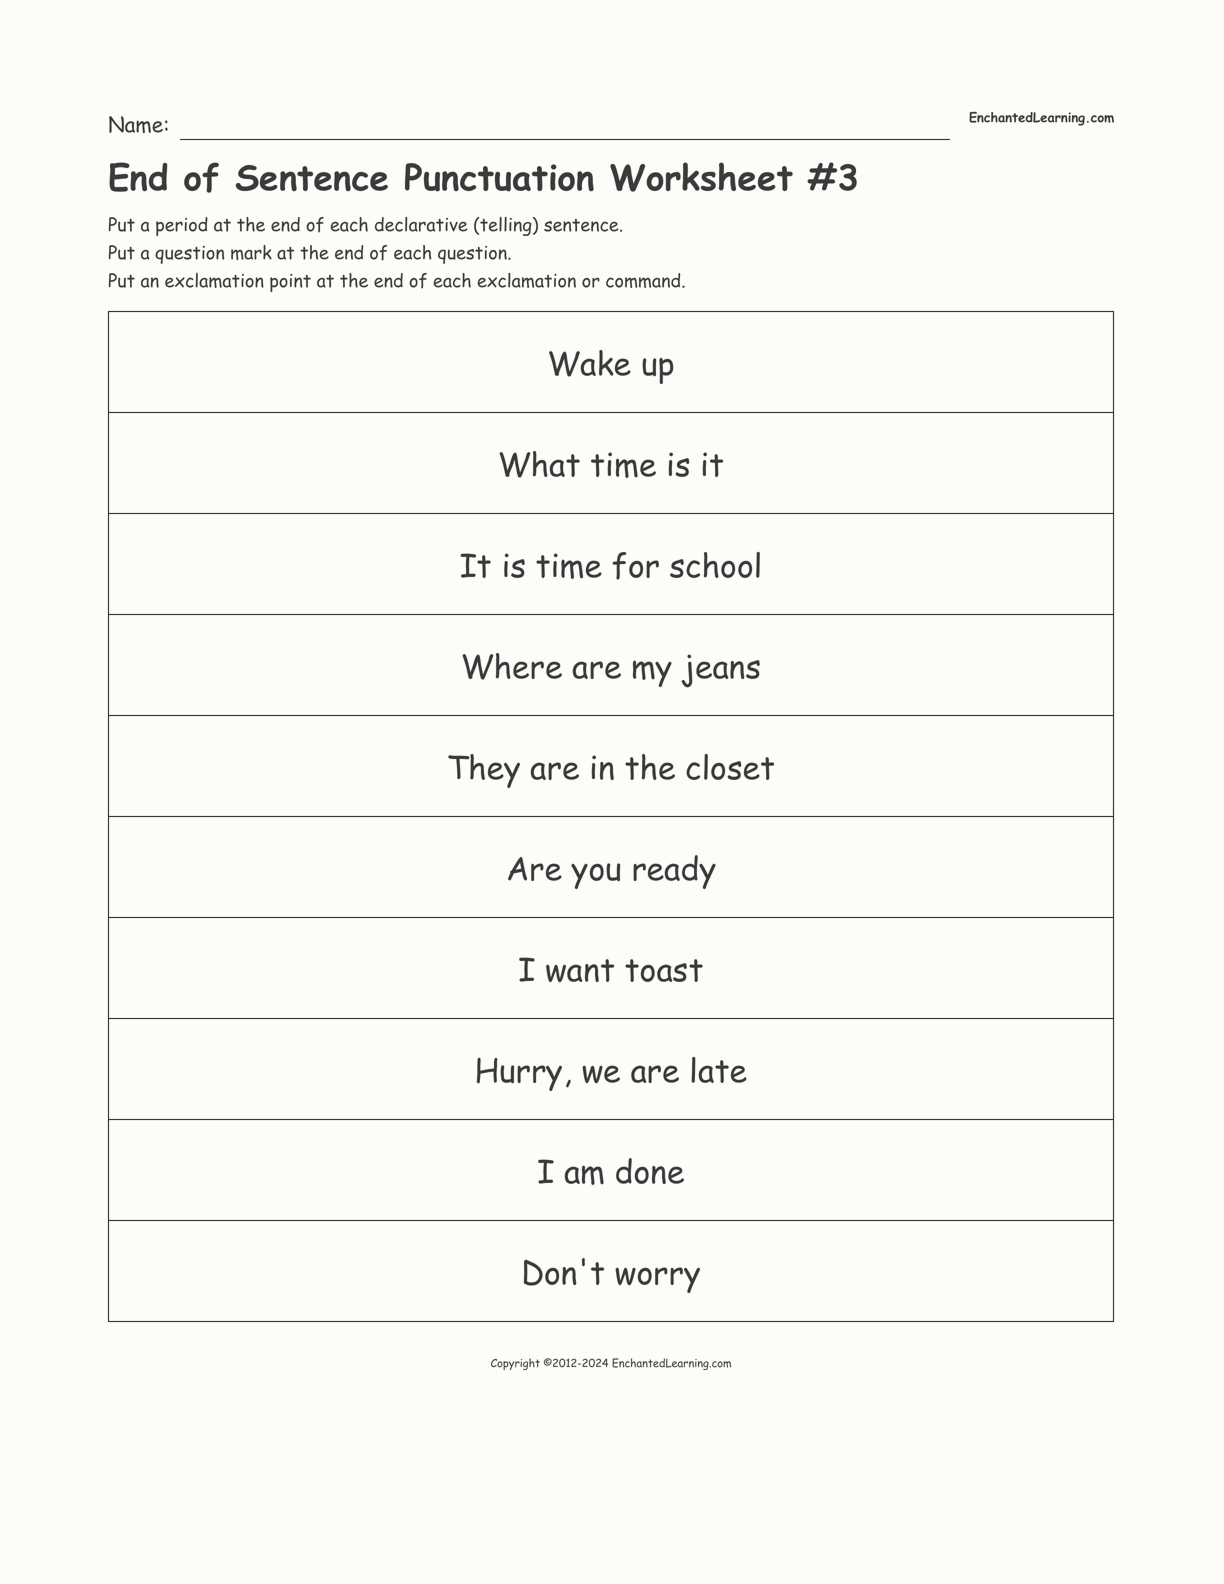 End of Sentence Punctuation Worksheet #3 interactive worksheet page 1